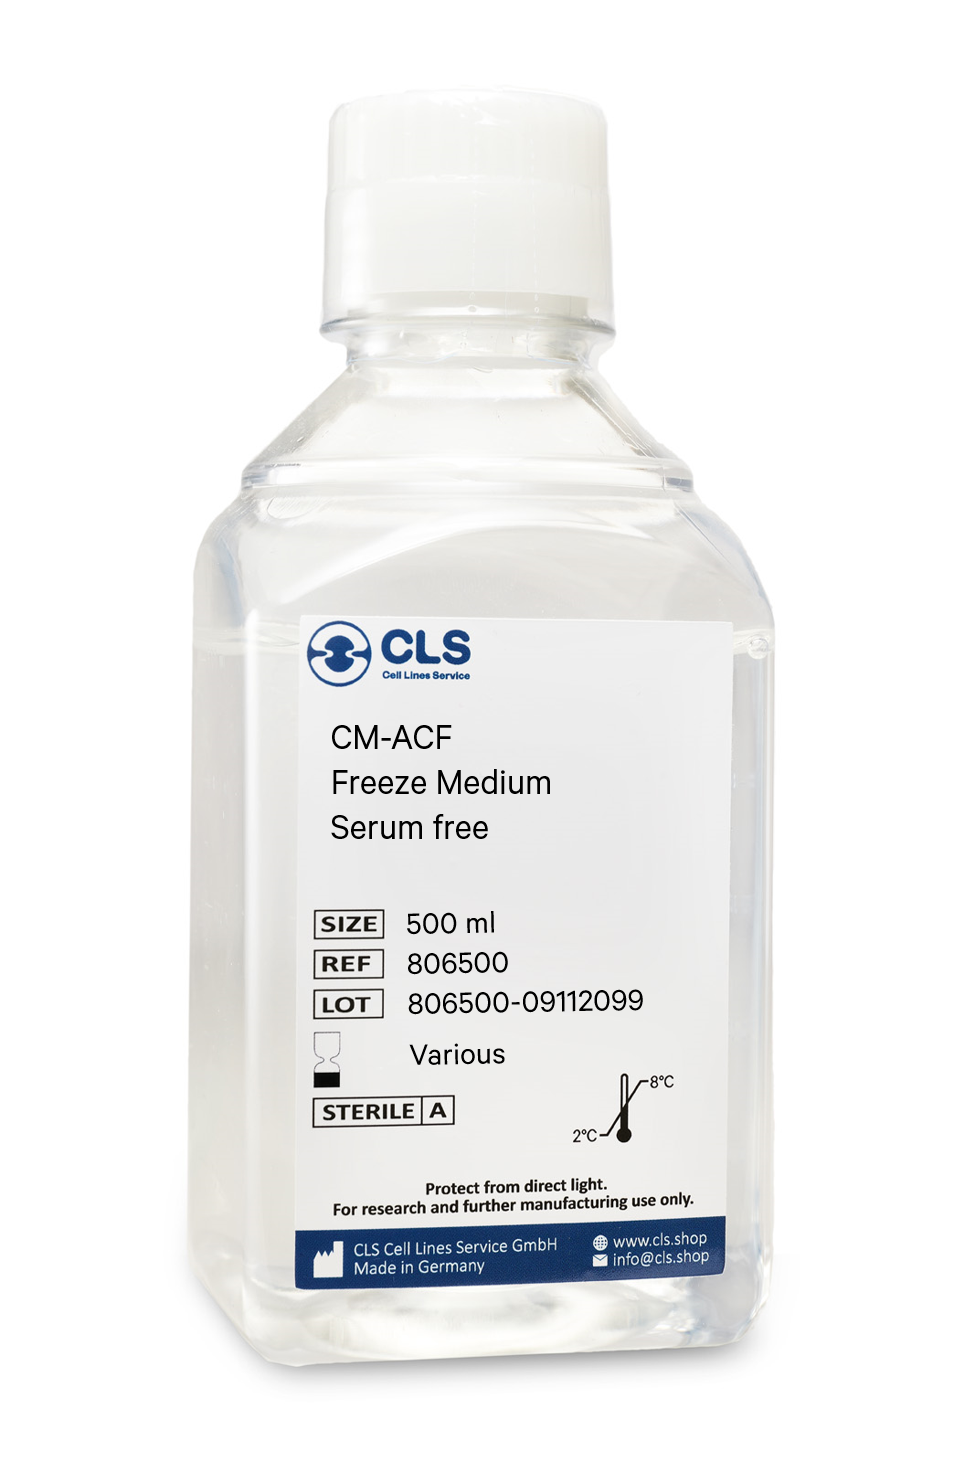 Freeze medium CM-ACF, serum free